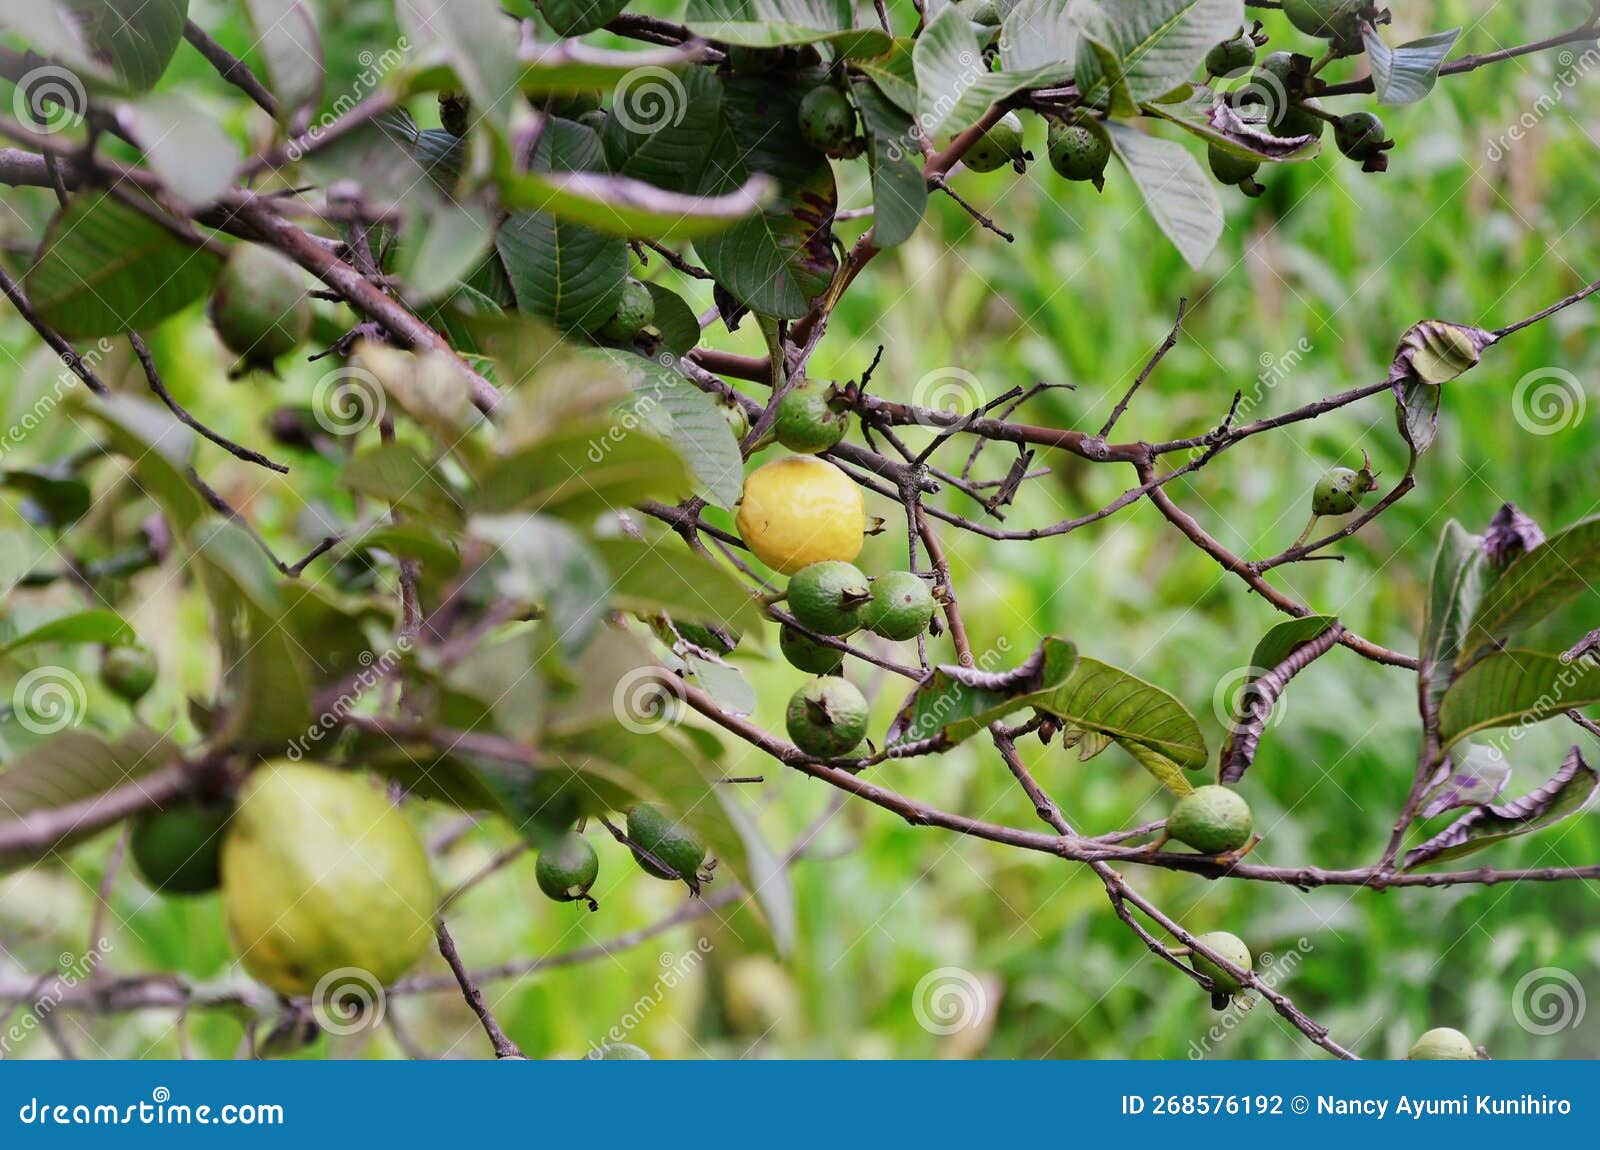 ripe and unripe fruits of psidium guajava